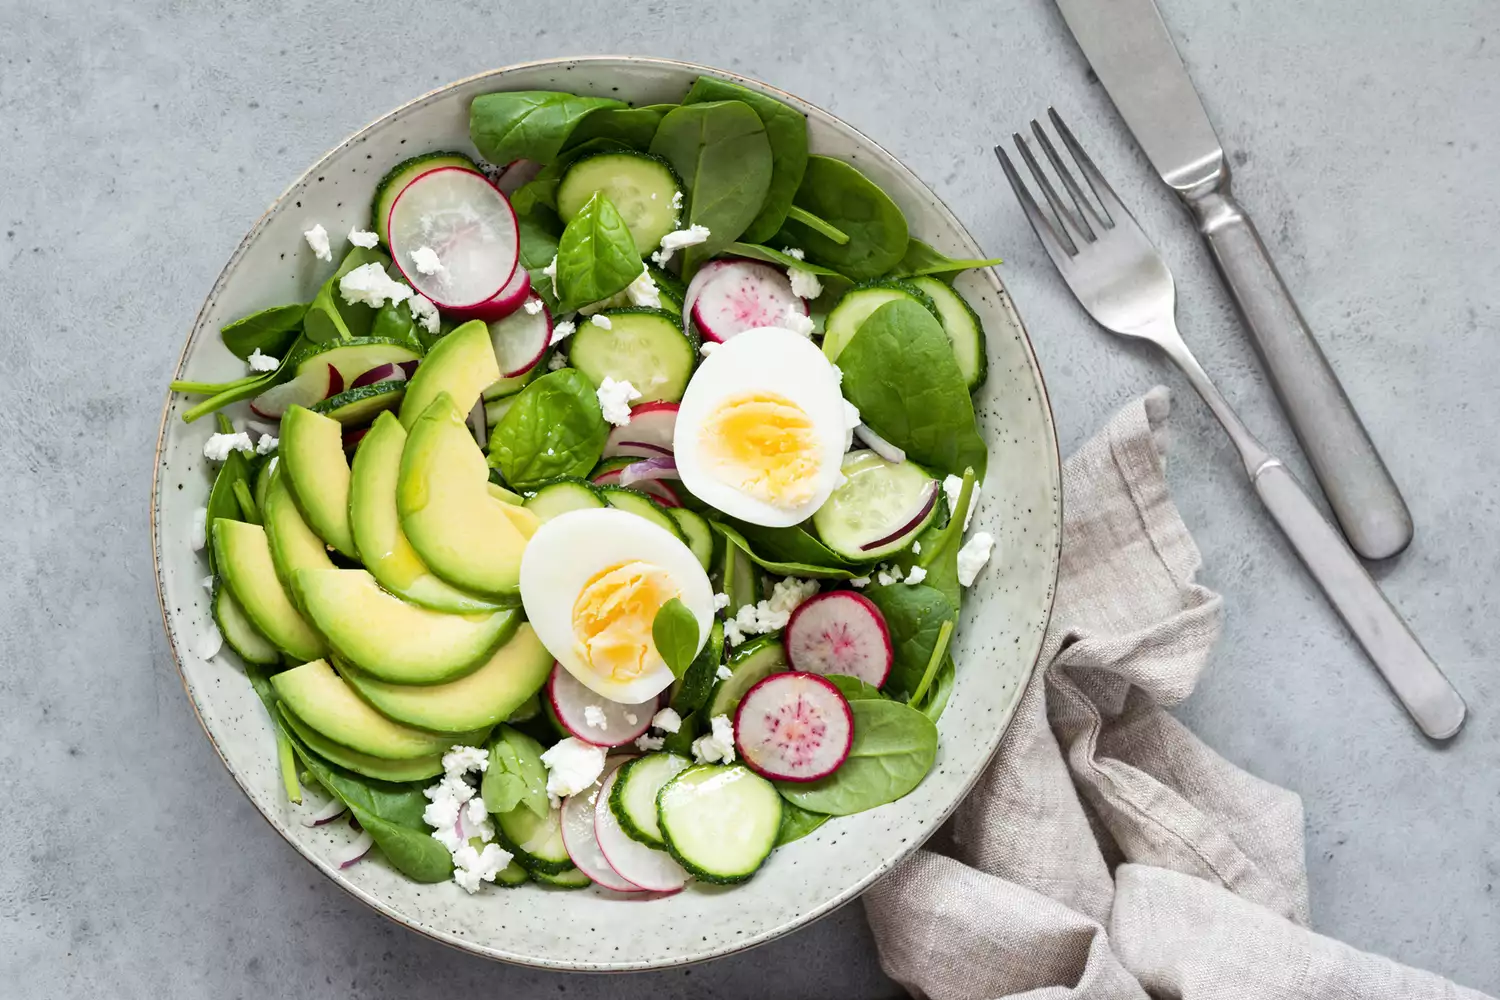 Three Simple Ways To Improve Your Next Salad